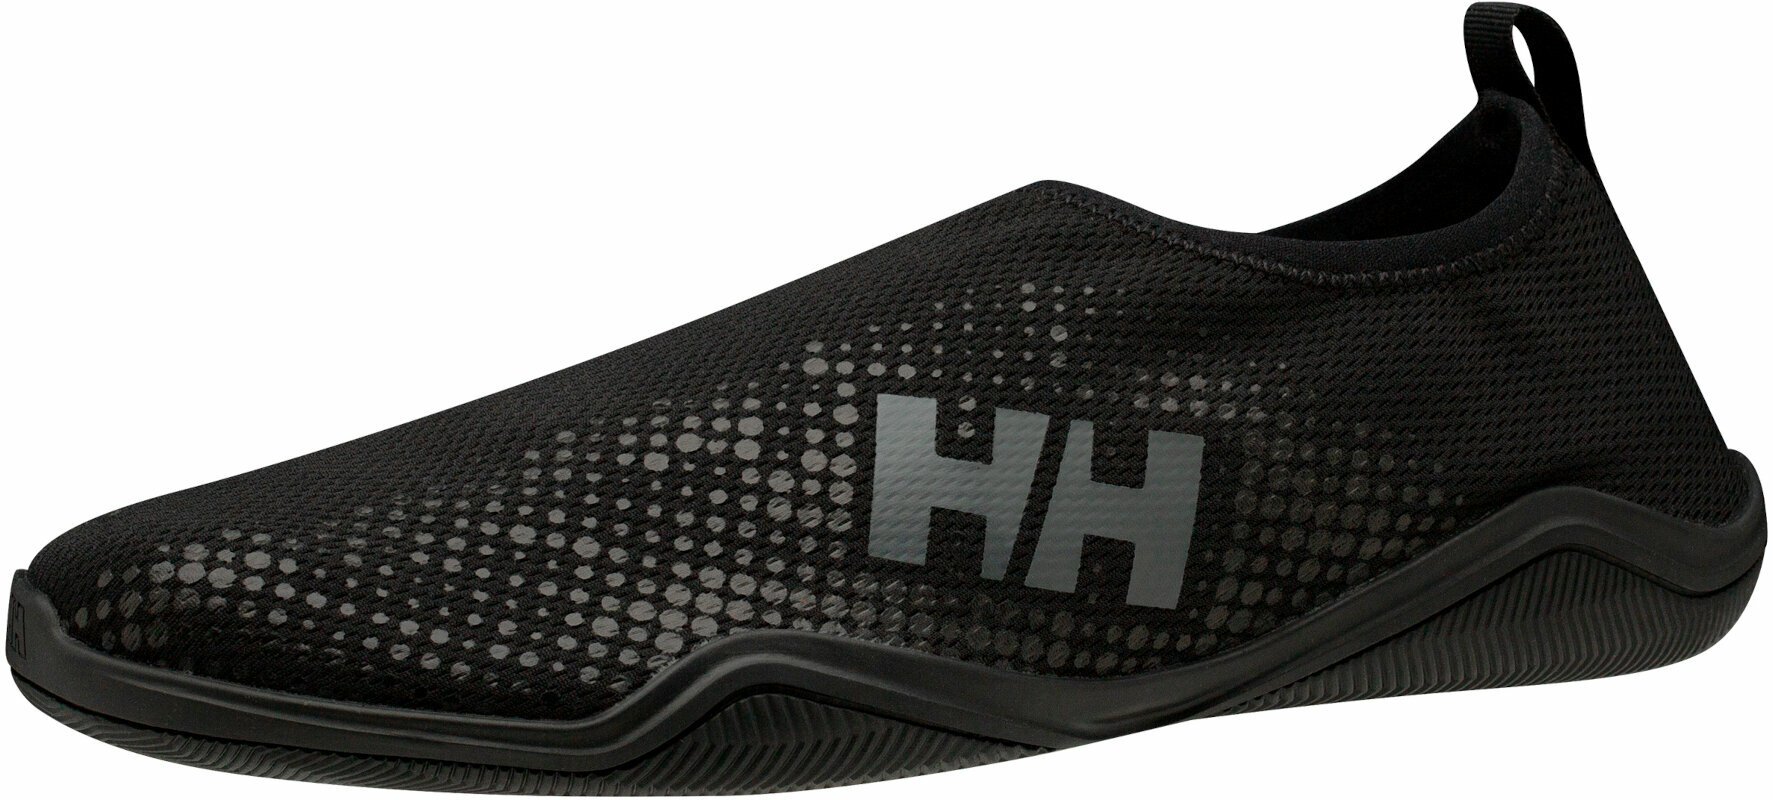 Buty żeglarskie Helly Hansen Men's Crest Watermoc Black/Charcoal 44